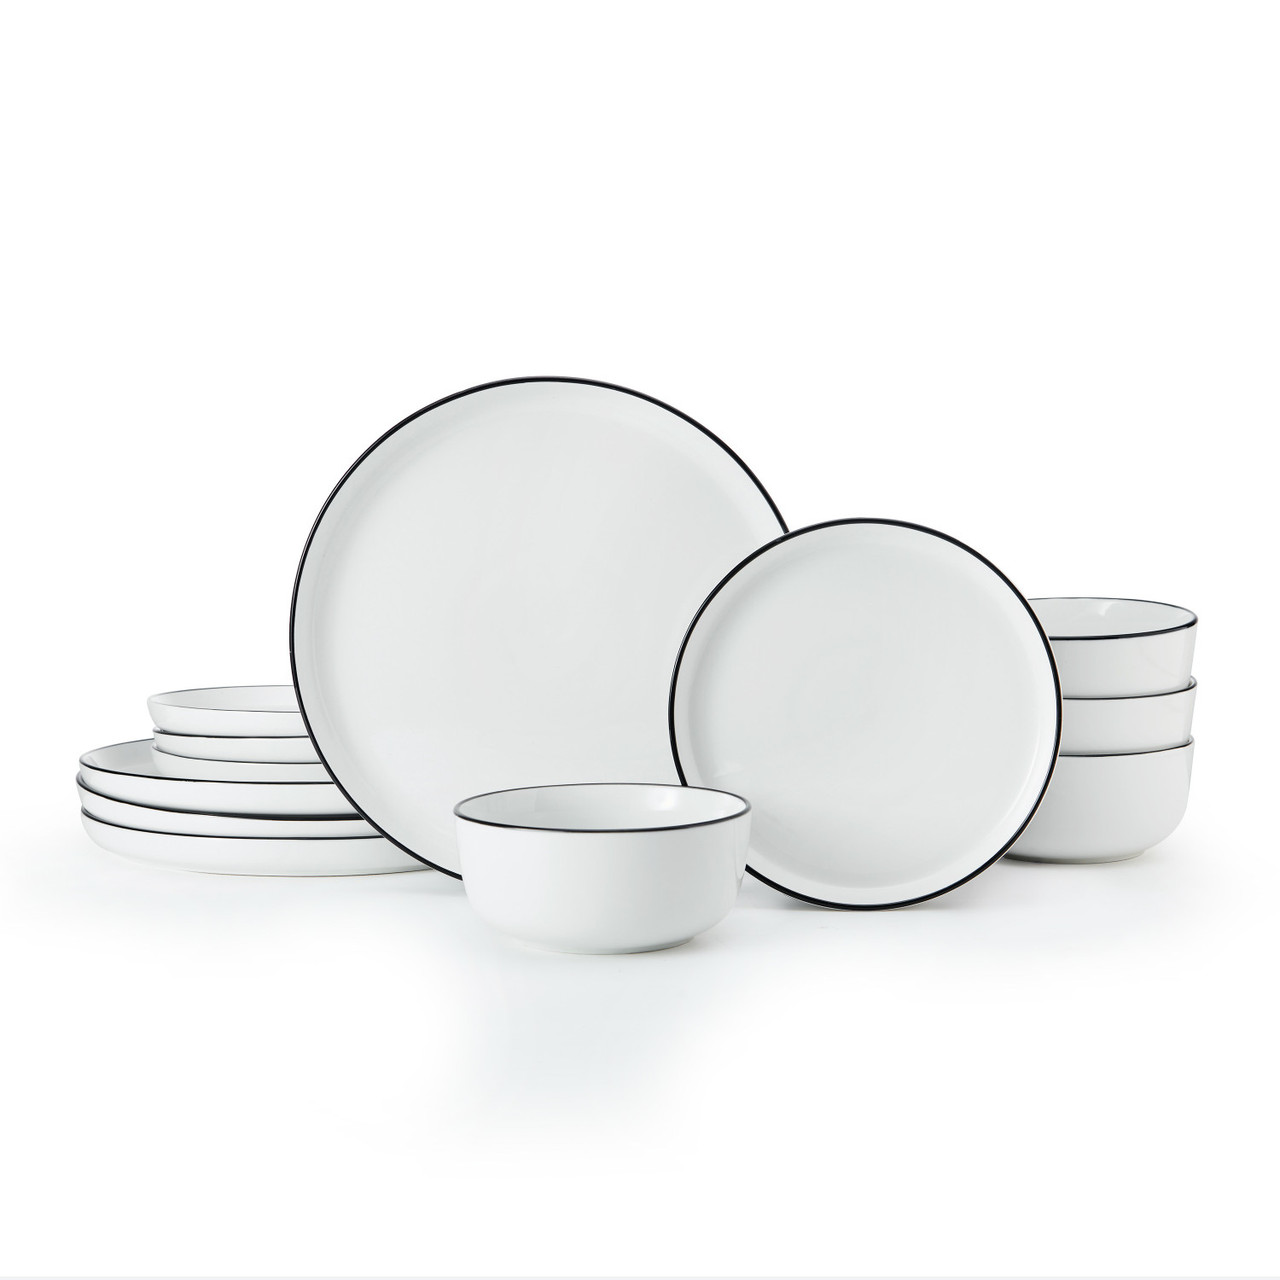 Mikasa Limestone Porcelain Dinner Set - 12pcs - White